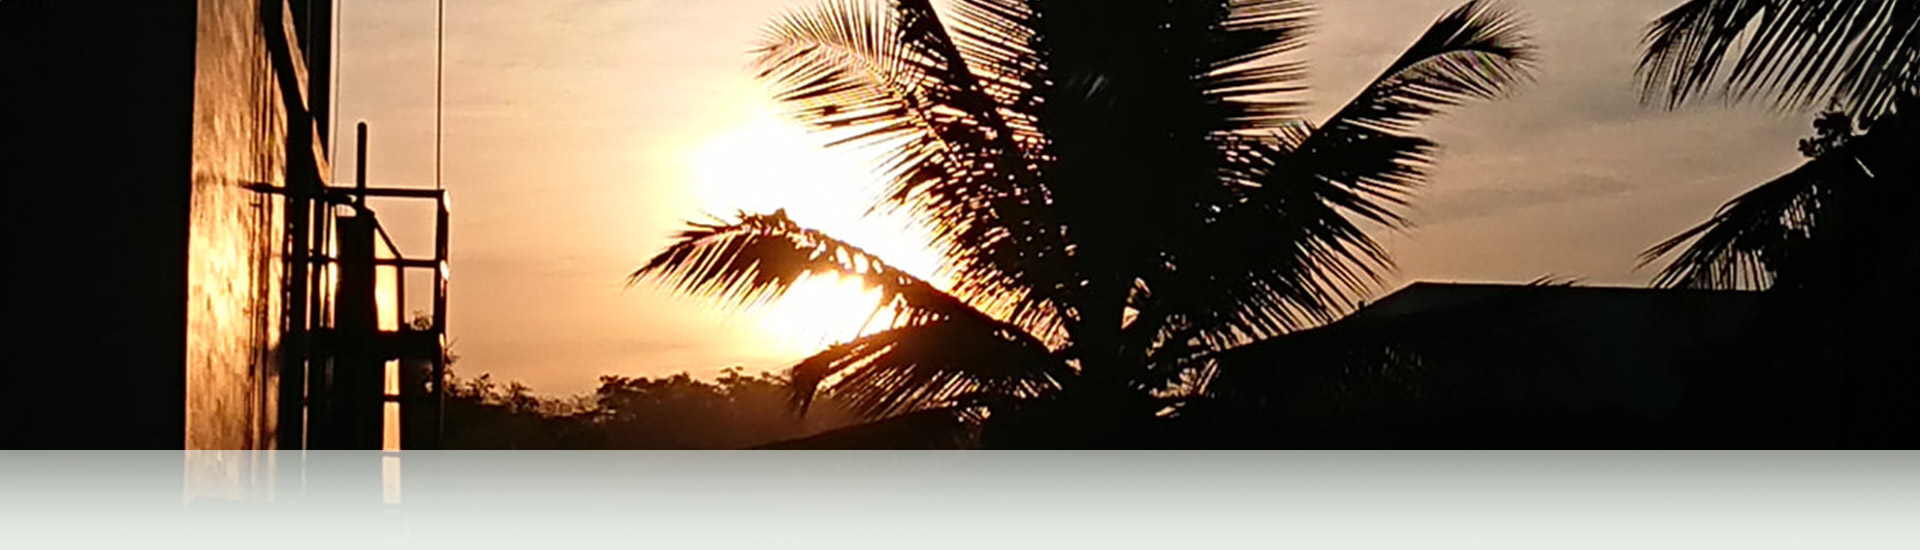 beautiful sunset with palm tree